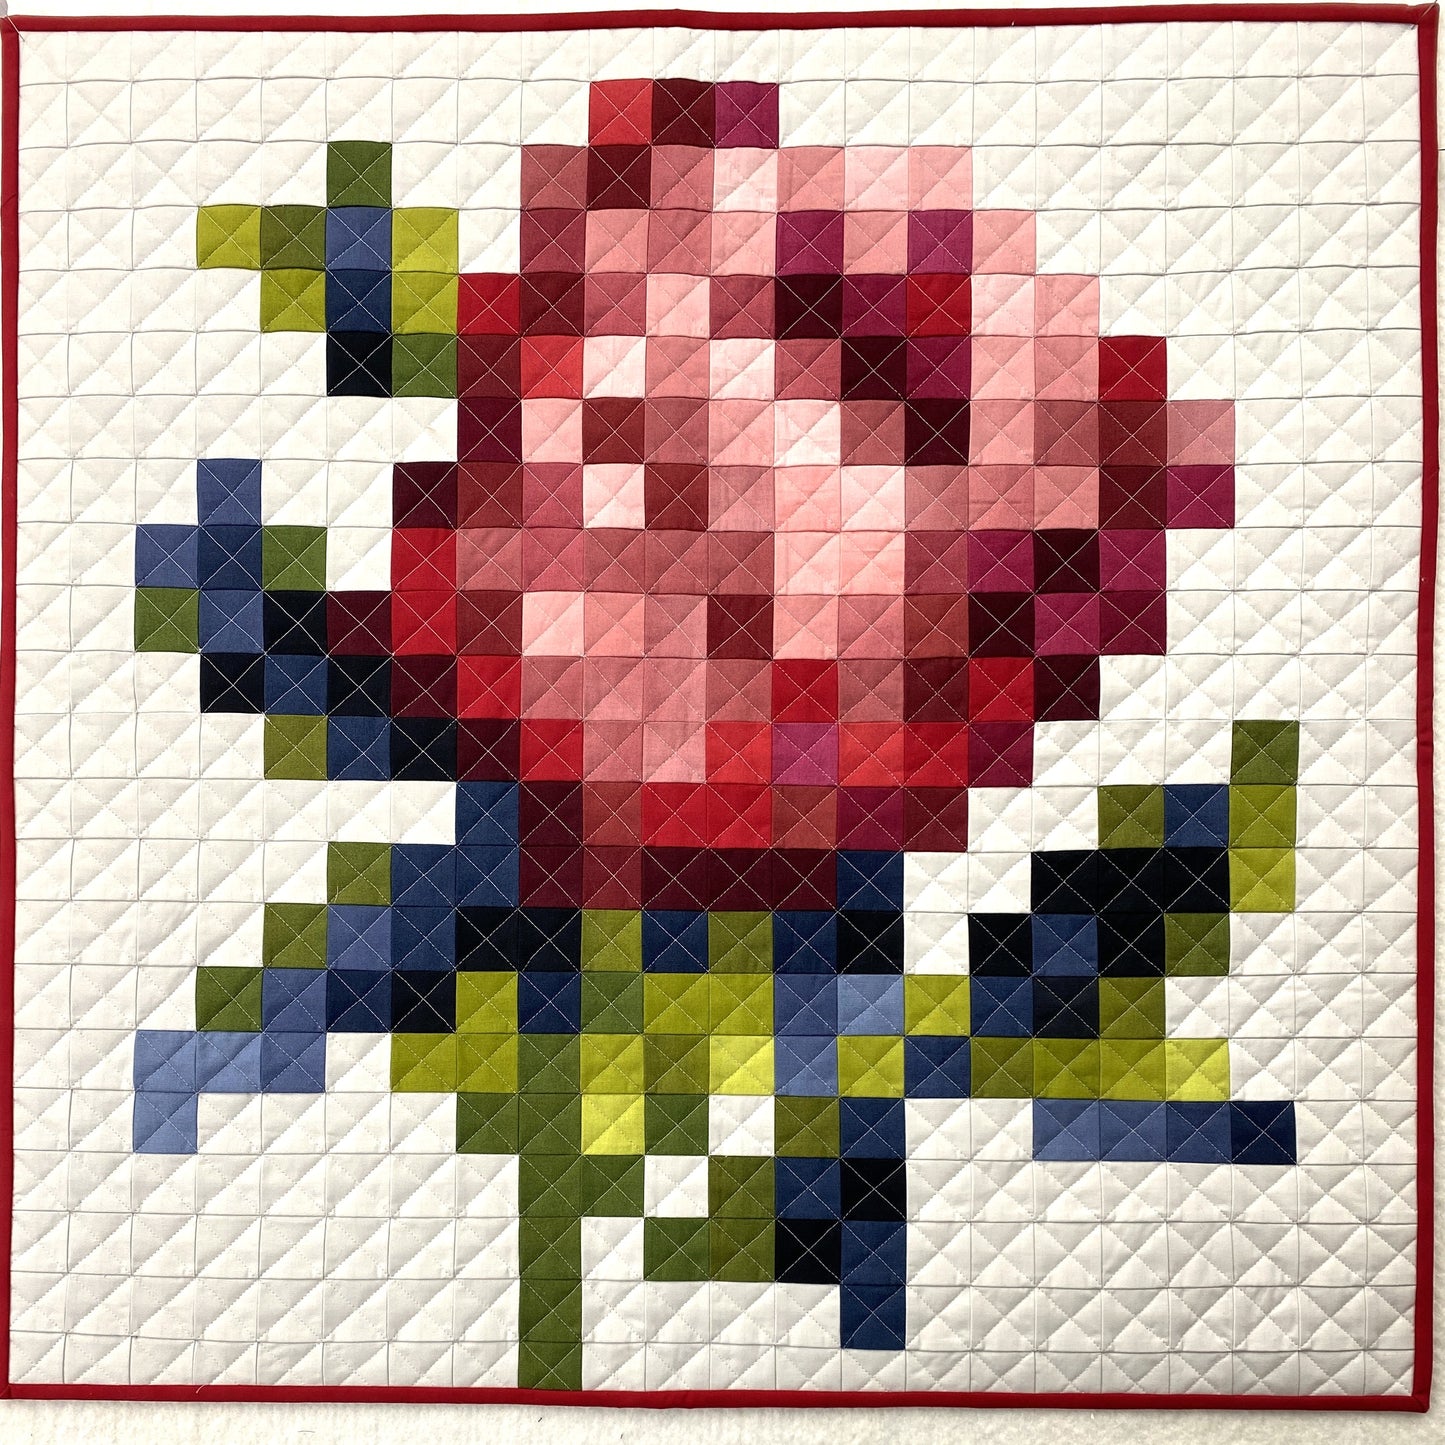 KIT- Cross Stitch Flower Quilt: A Pattern-less Approach QUILTCON 2024